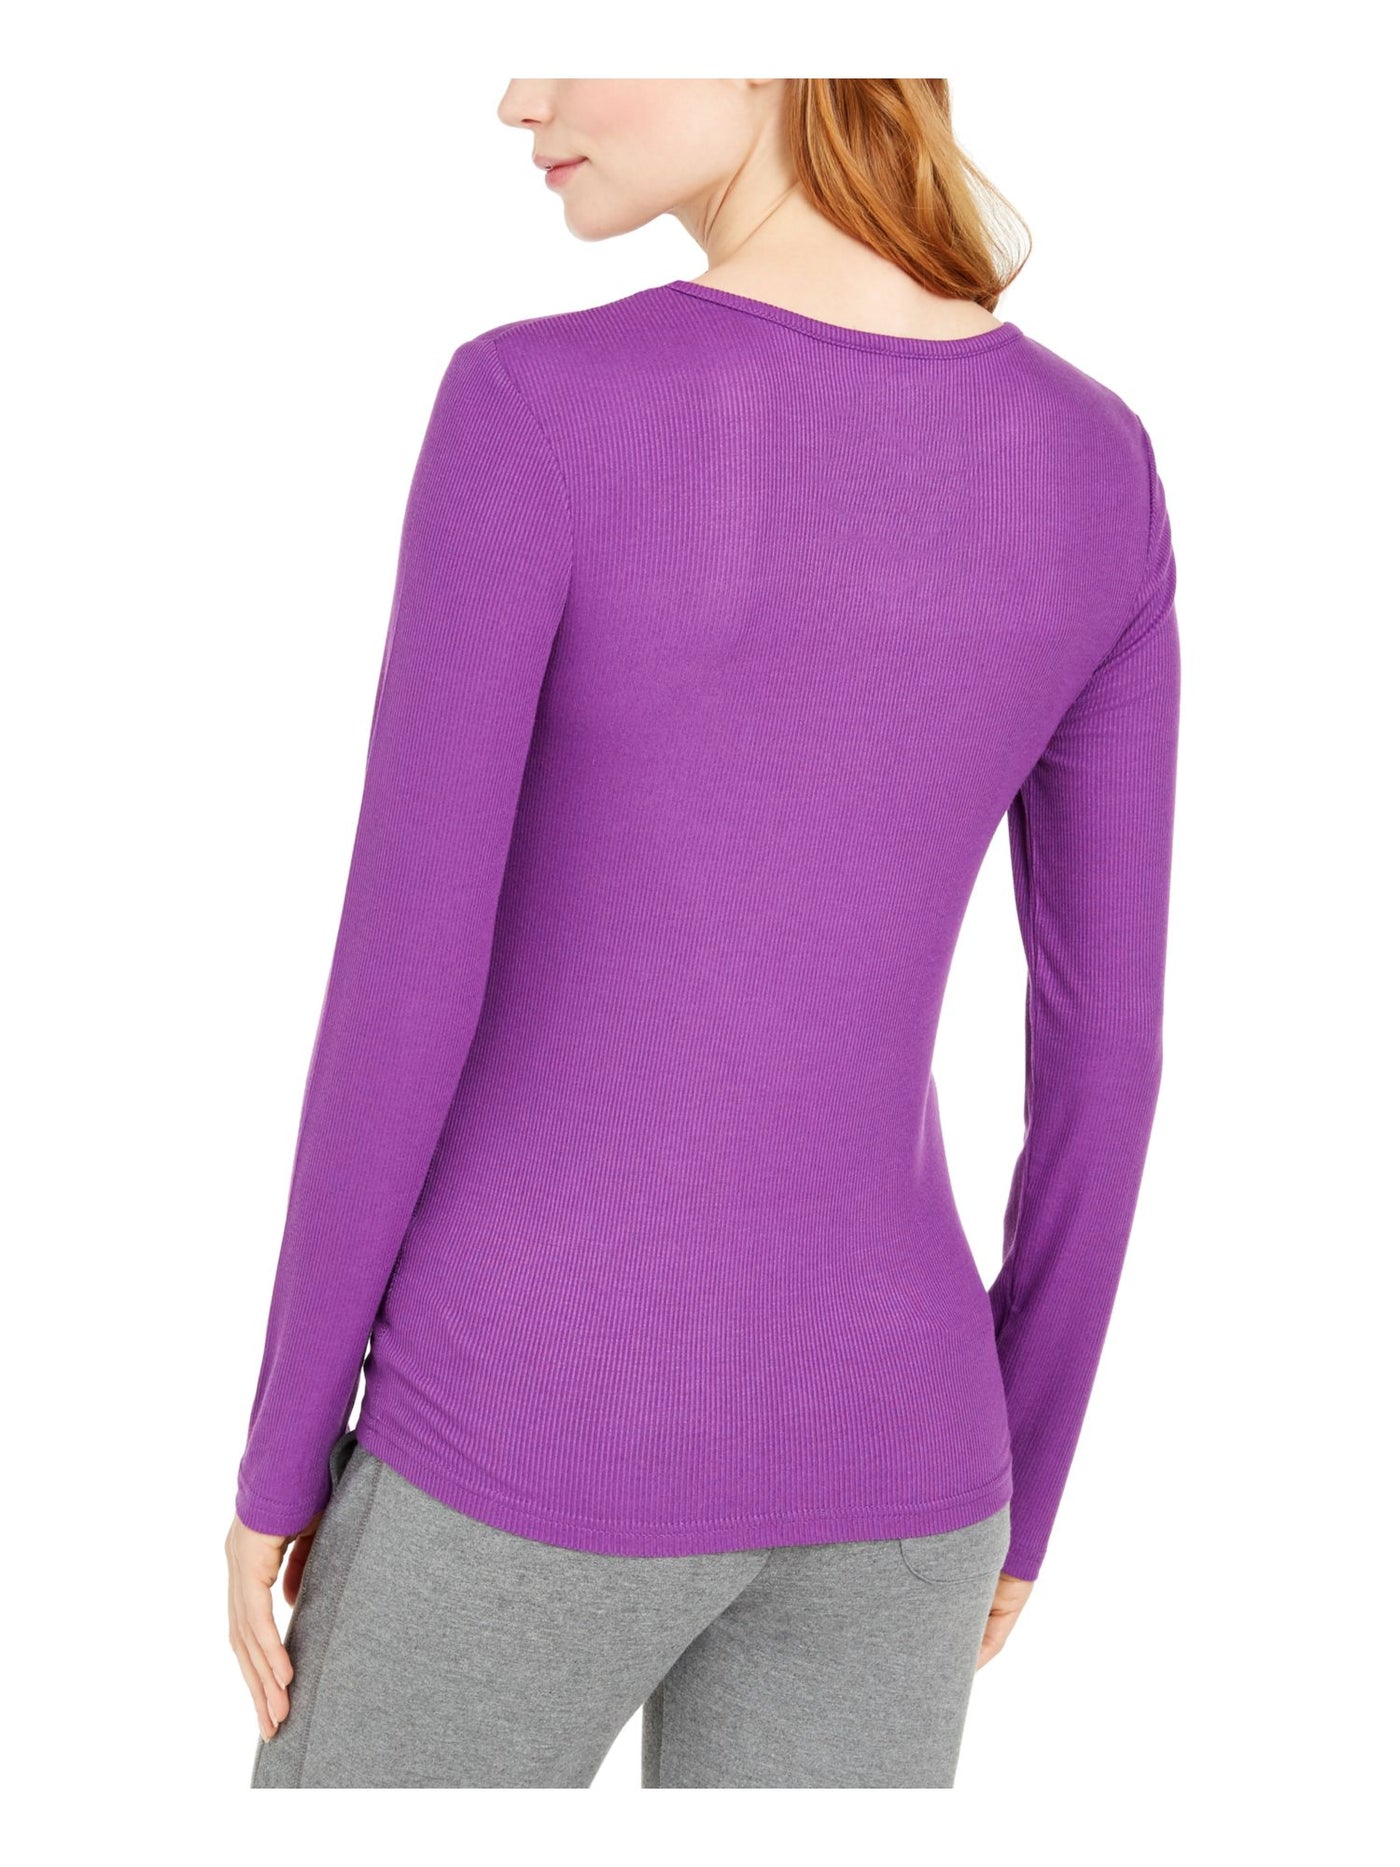 Vera Bradley Intimates Purple Rayon Solid Sleepwear Shirt Size: S